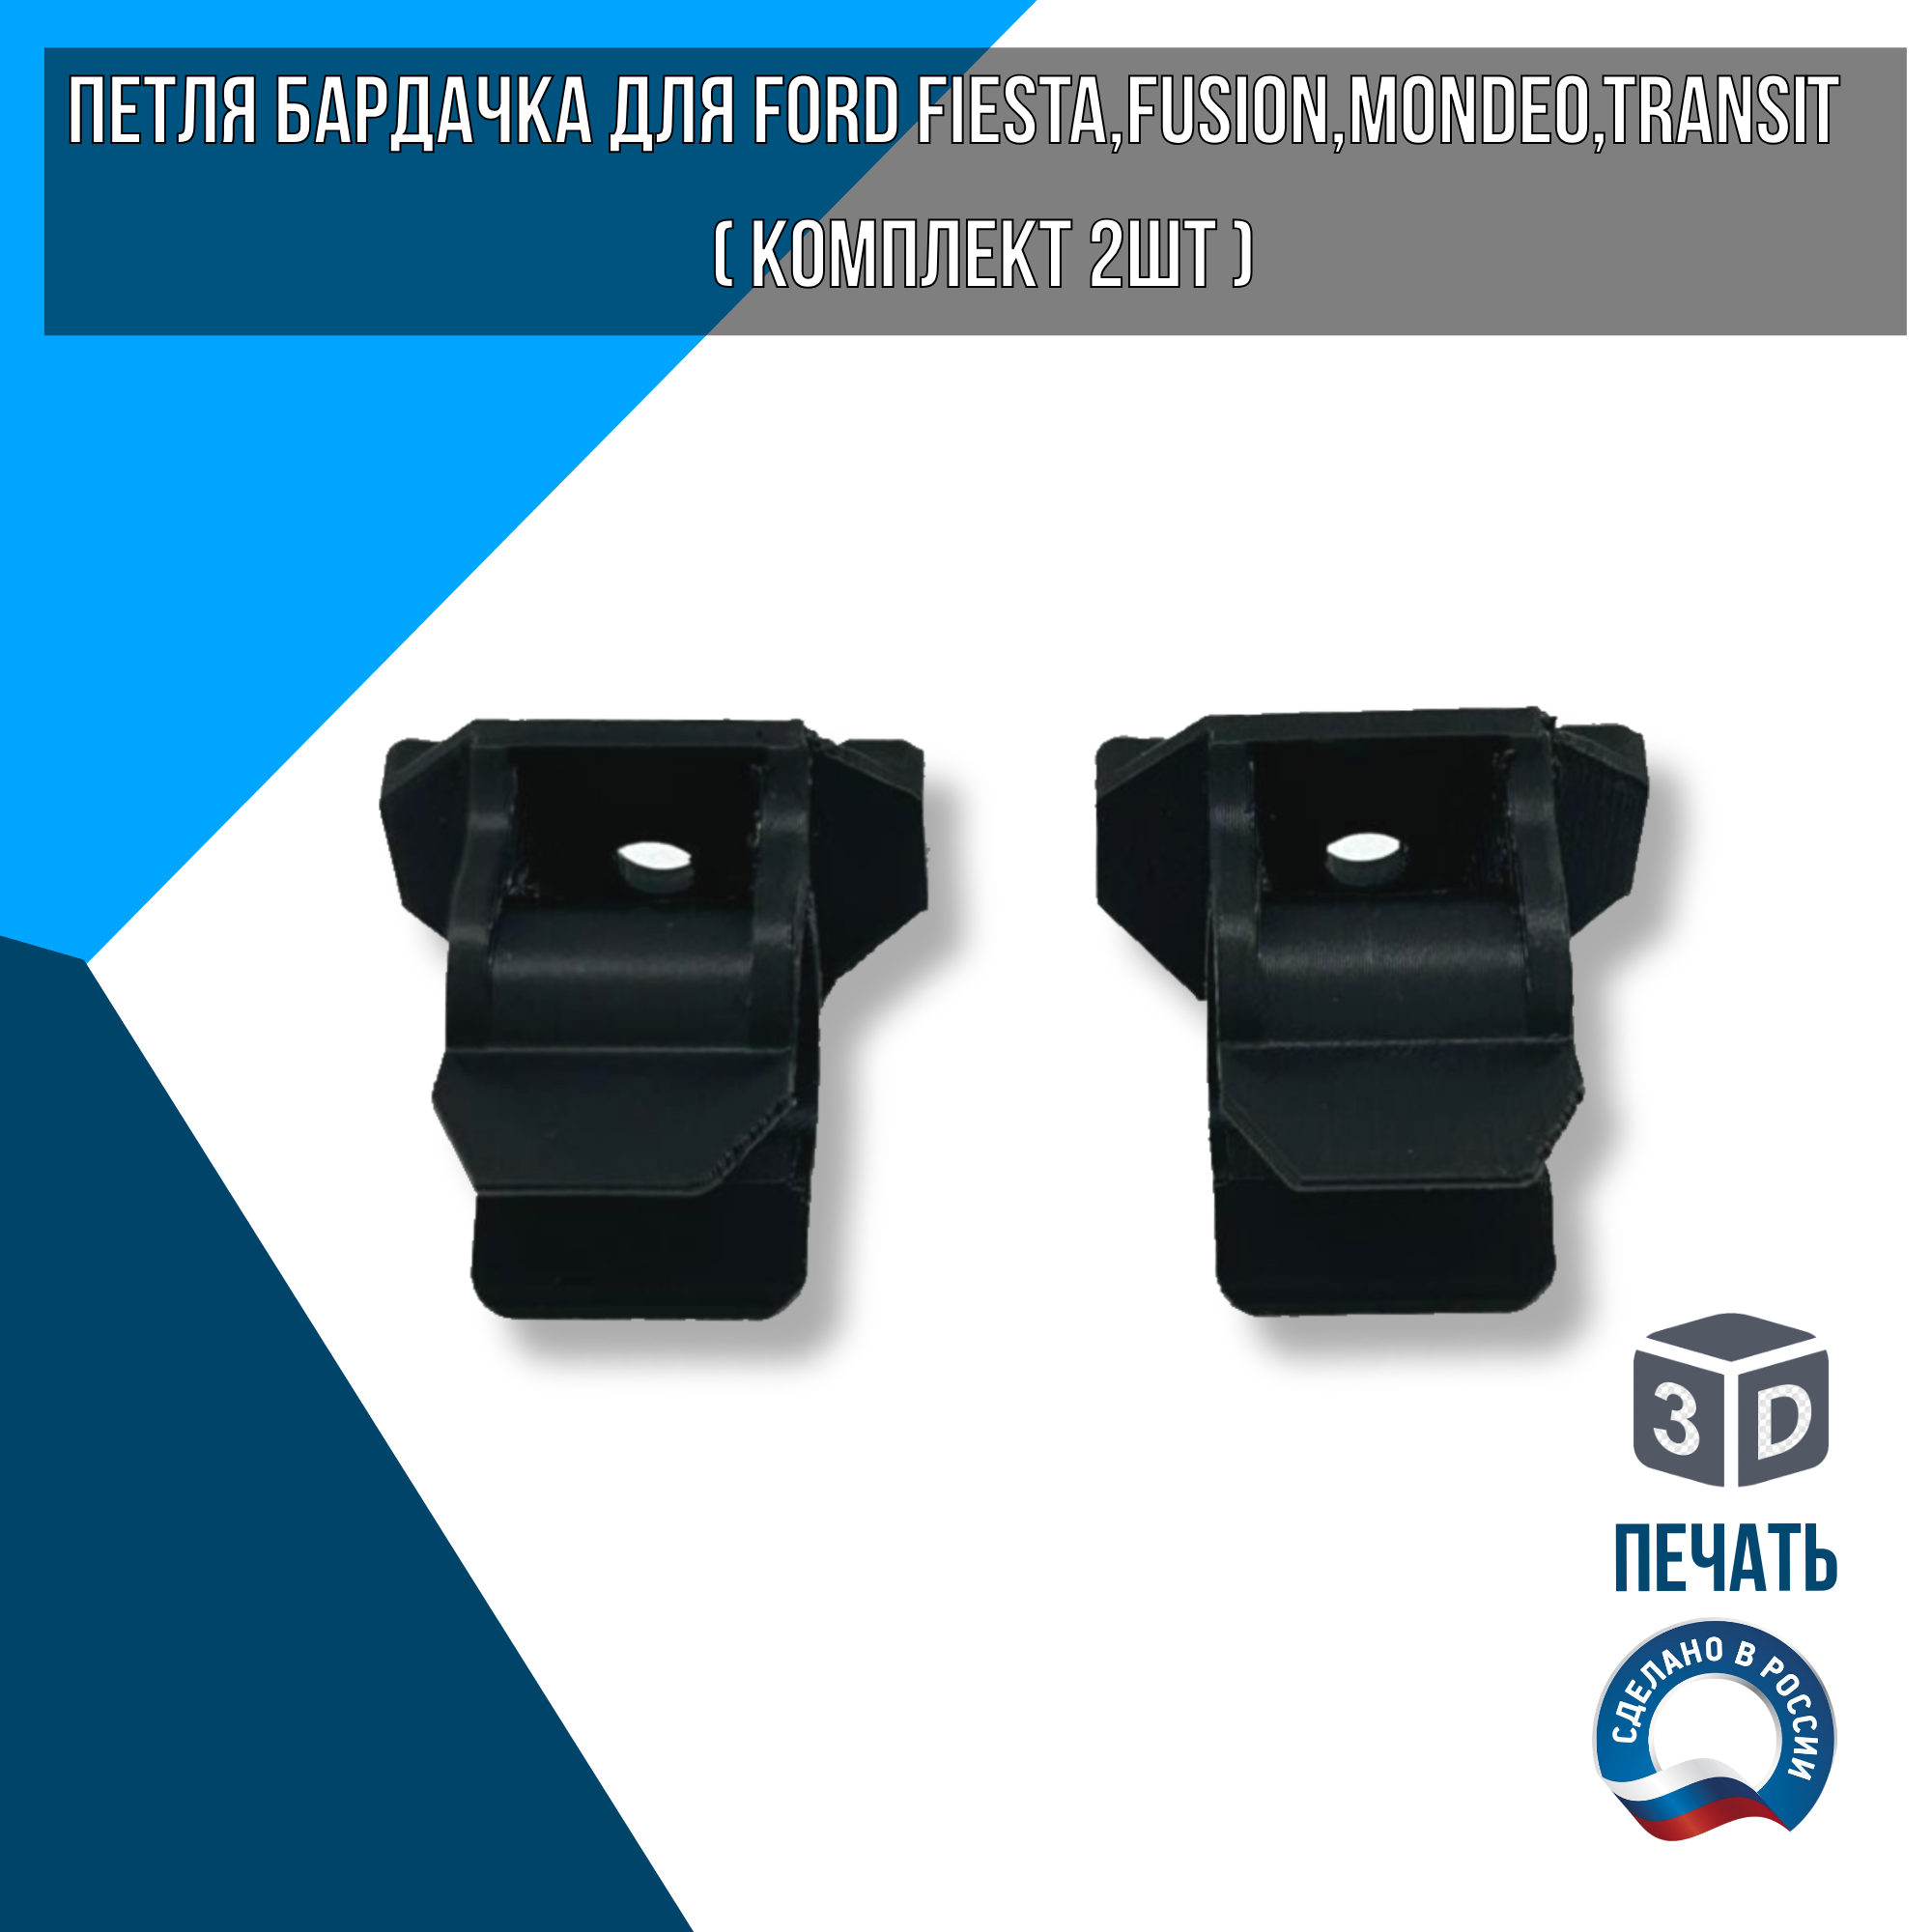 Петля бардачка для Ford Fiesta, Fusion, Mondeo, Transit (Комплект 2 шт.) 1464663